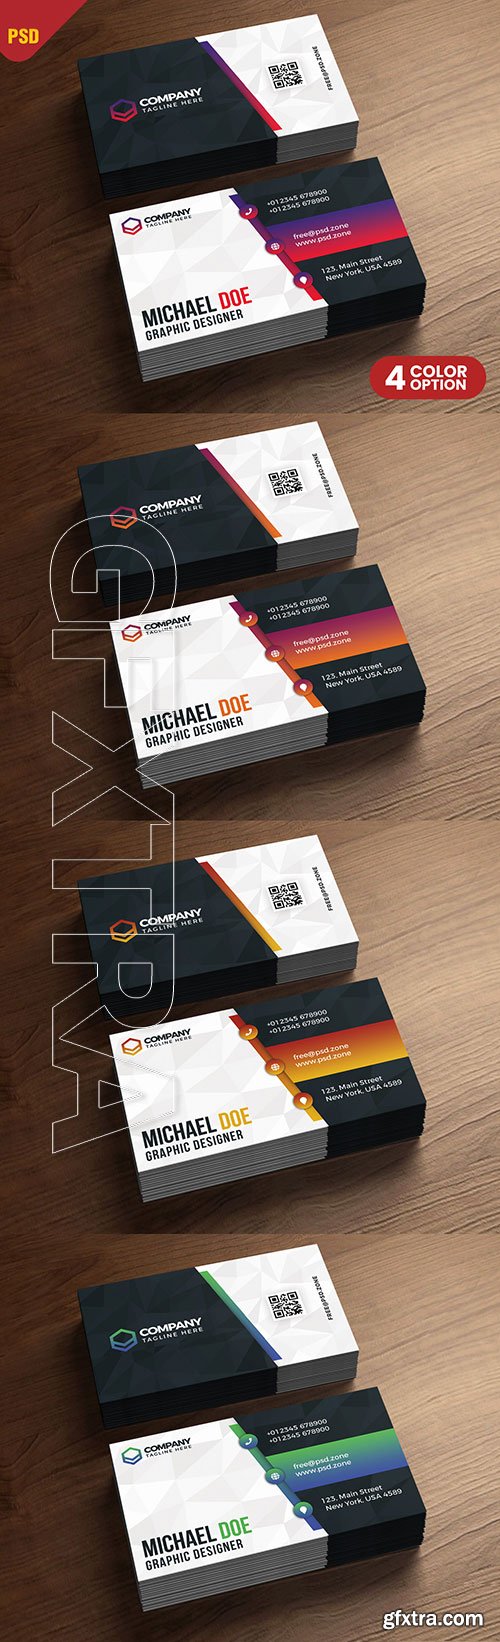 Business Card Design Templates PSD 2